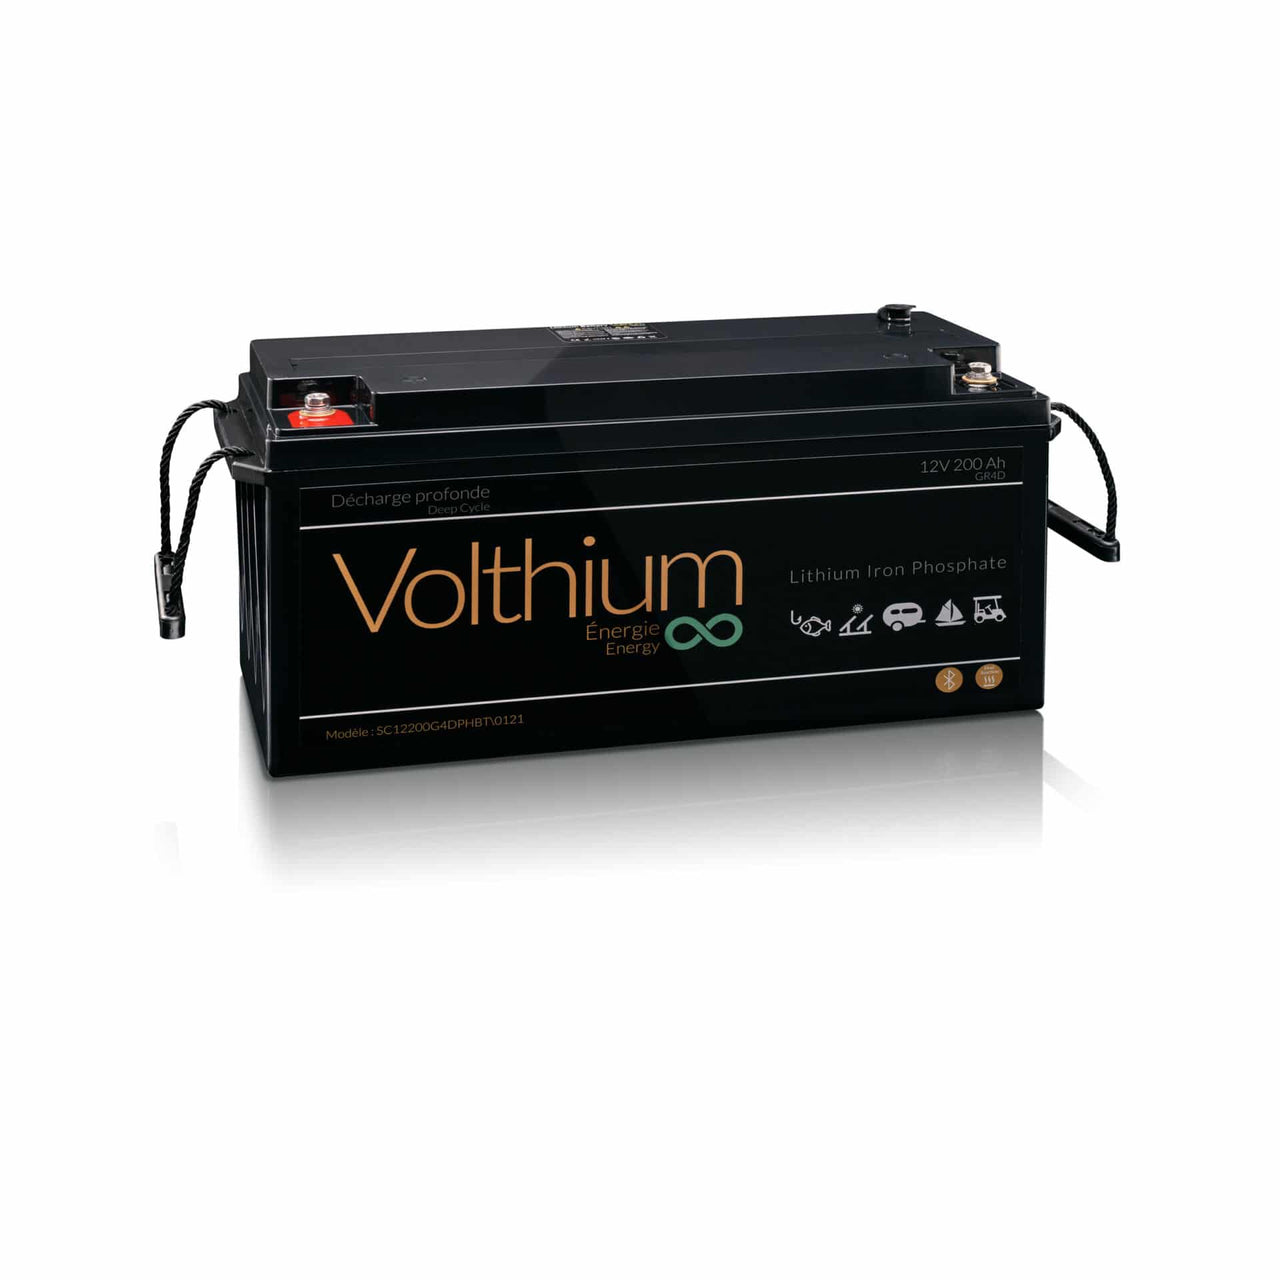 Volthium - 12V 200AH self-heating battery - 12.8-200-G4DY-CH2O